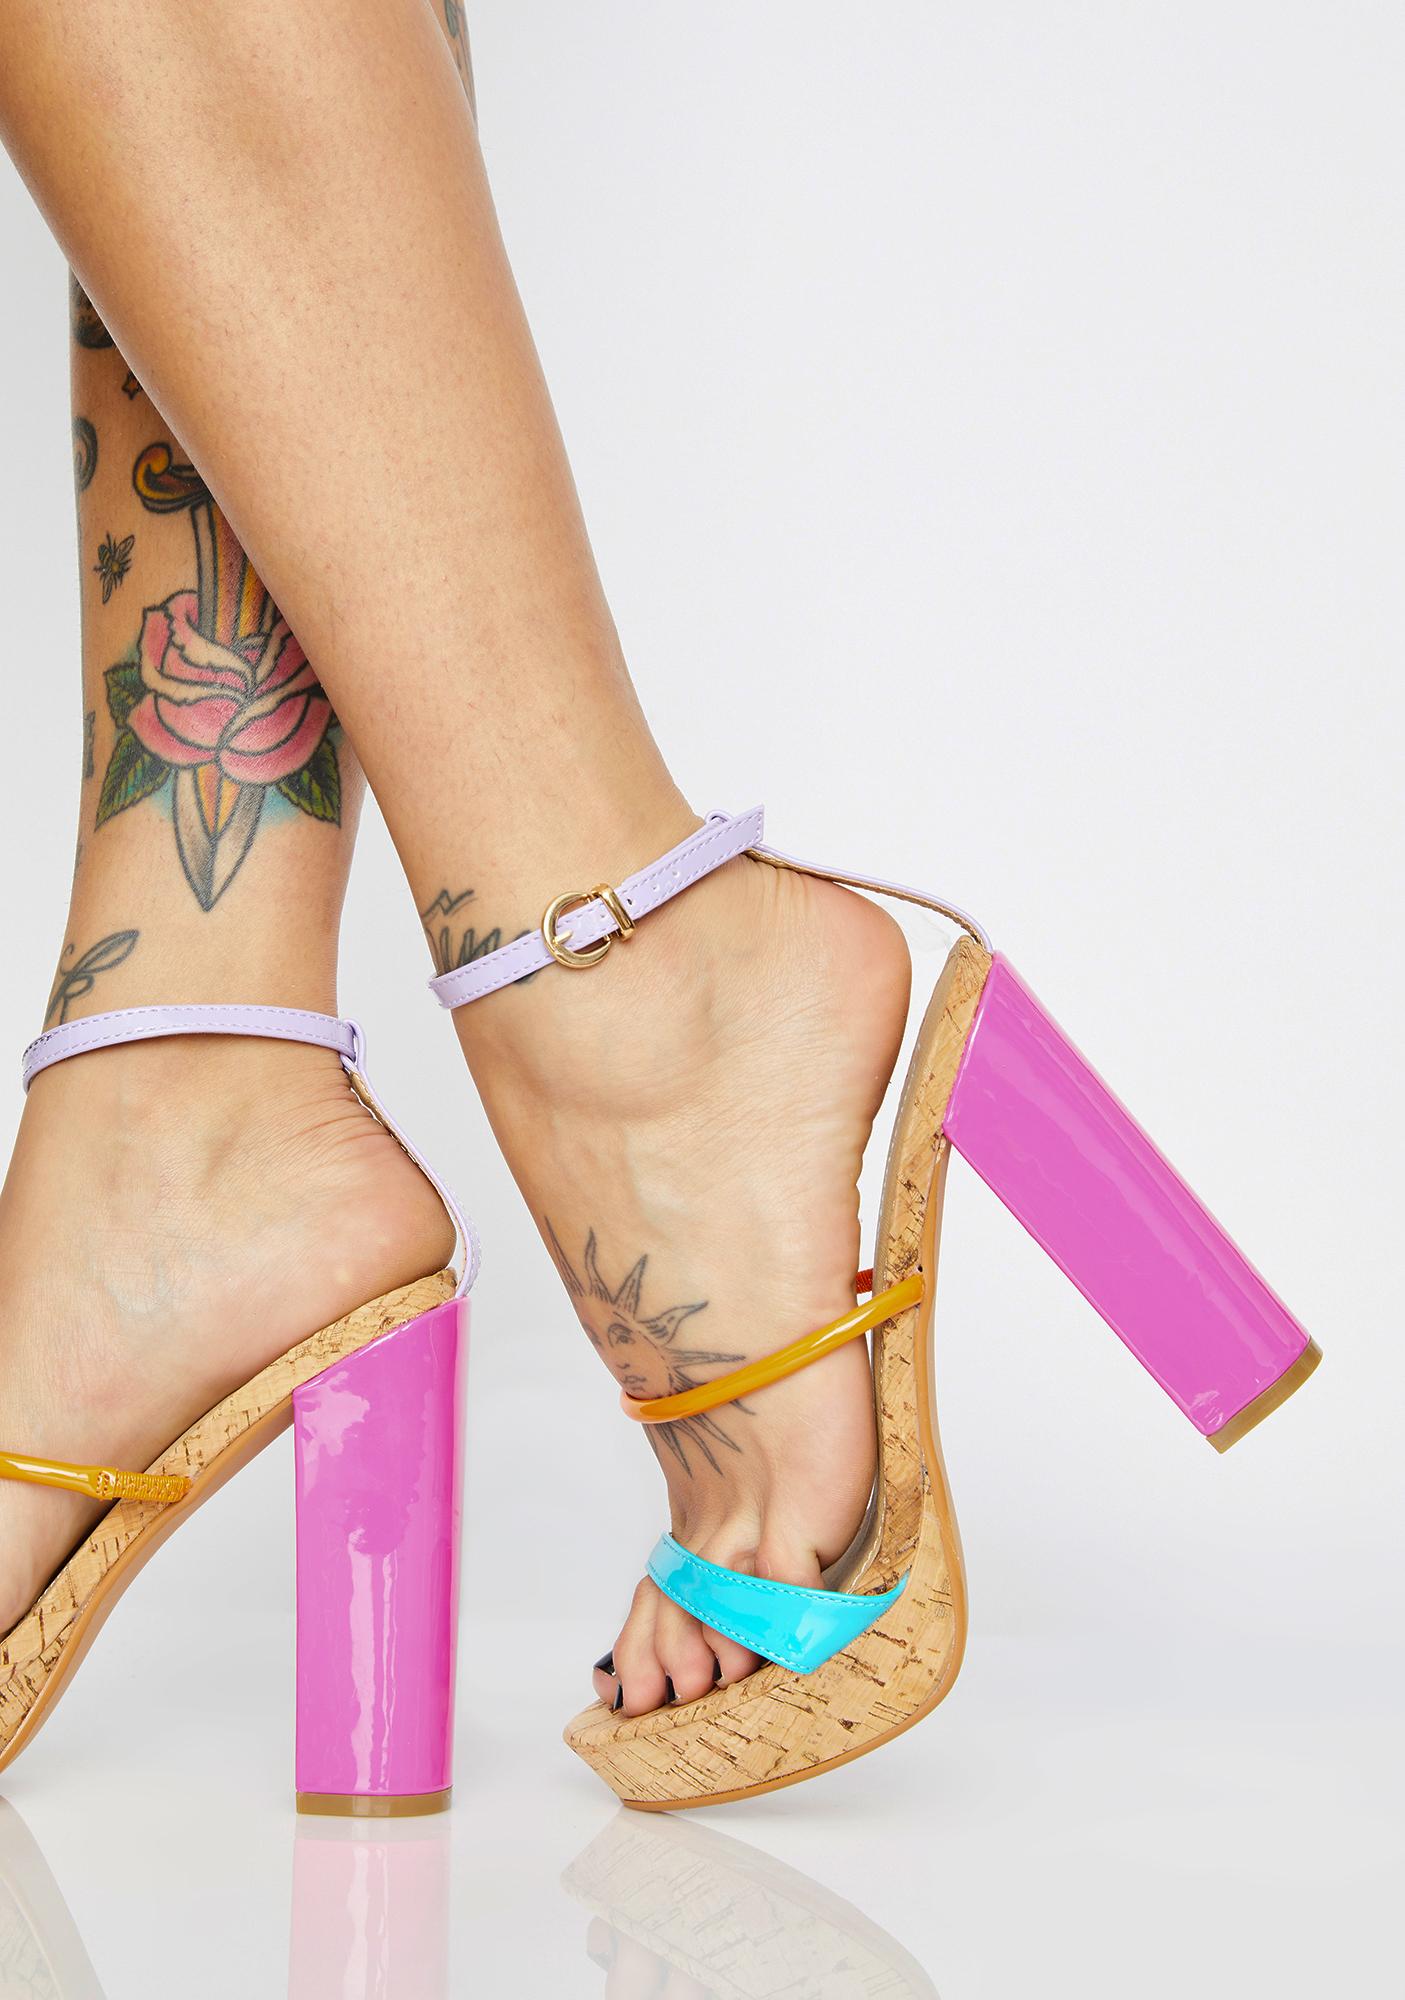 cork platform heels